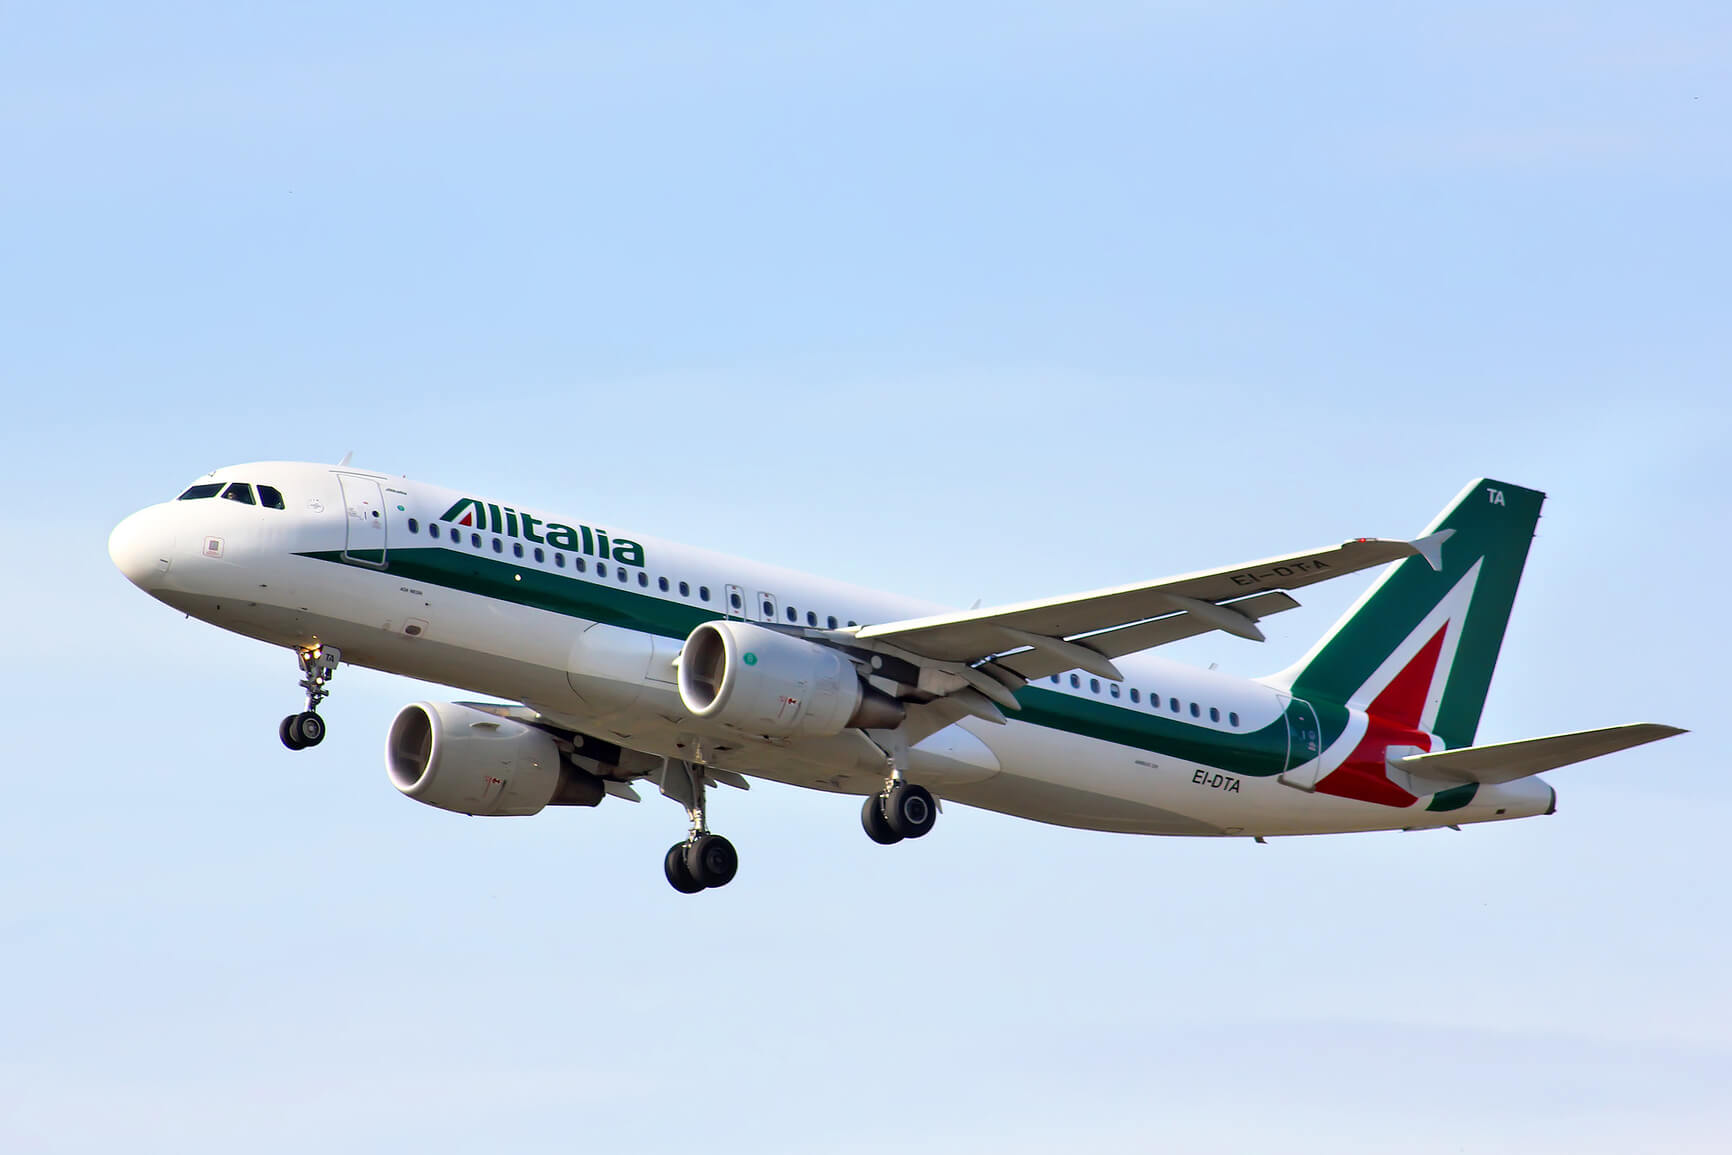 <div class='expired'>EXPIRED</div>PROMO CODE: 20% off Alitalia flights departing Europe | Secret Flying